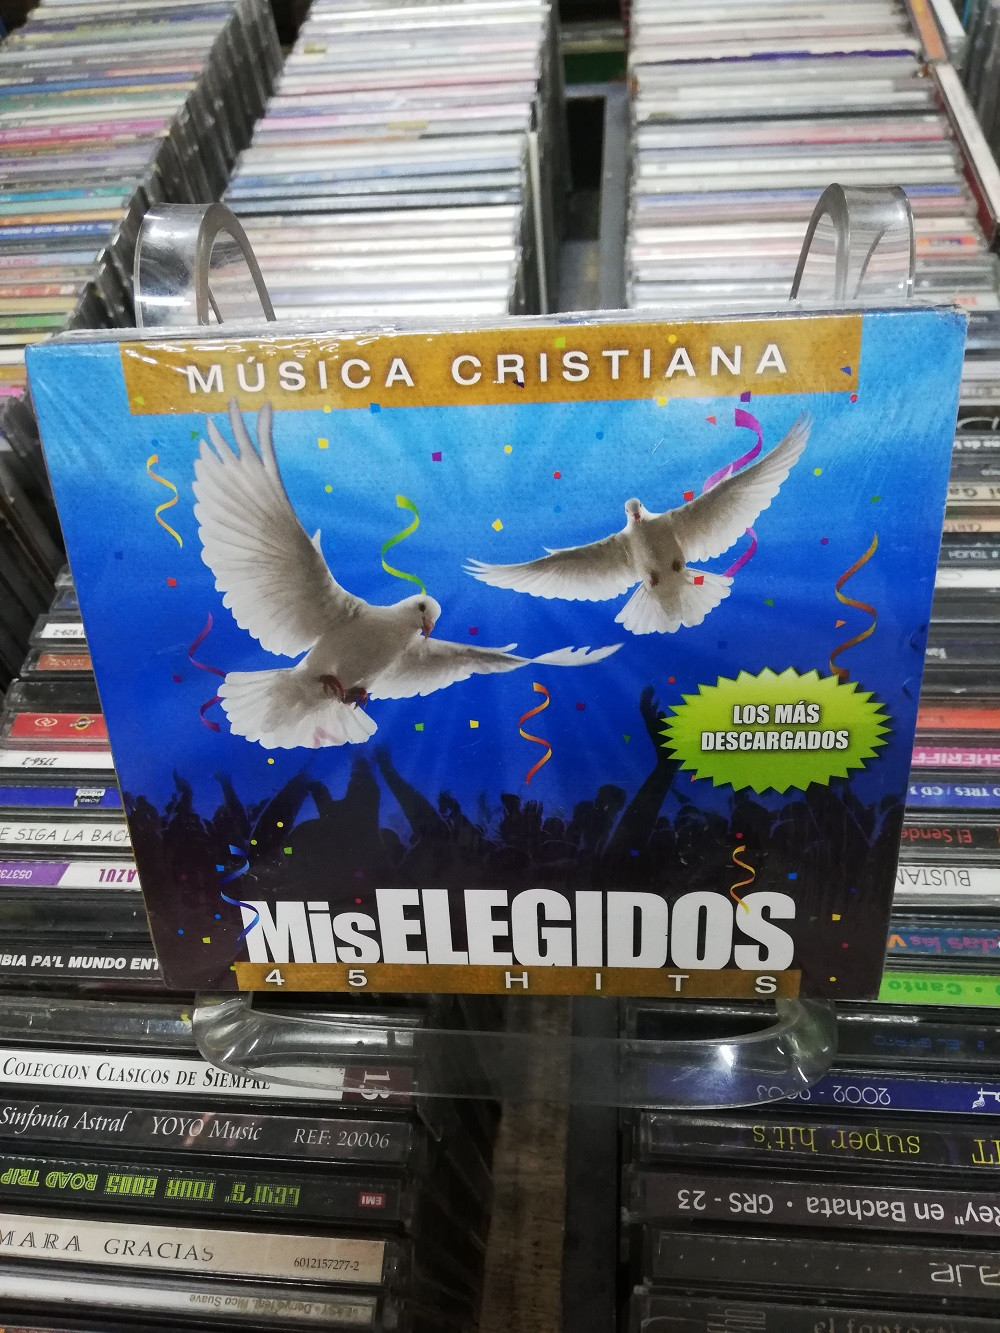 Imagen CD ESTUCHE NUEVO MIS ELEGIDOS, 45 HITS DE MÚSICA CRISTIANA 1